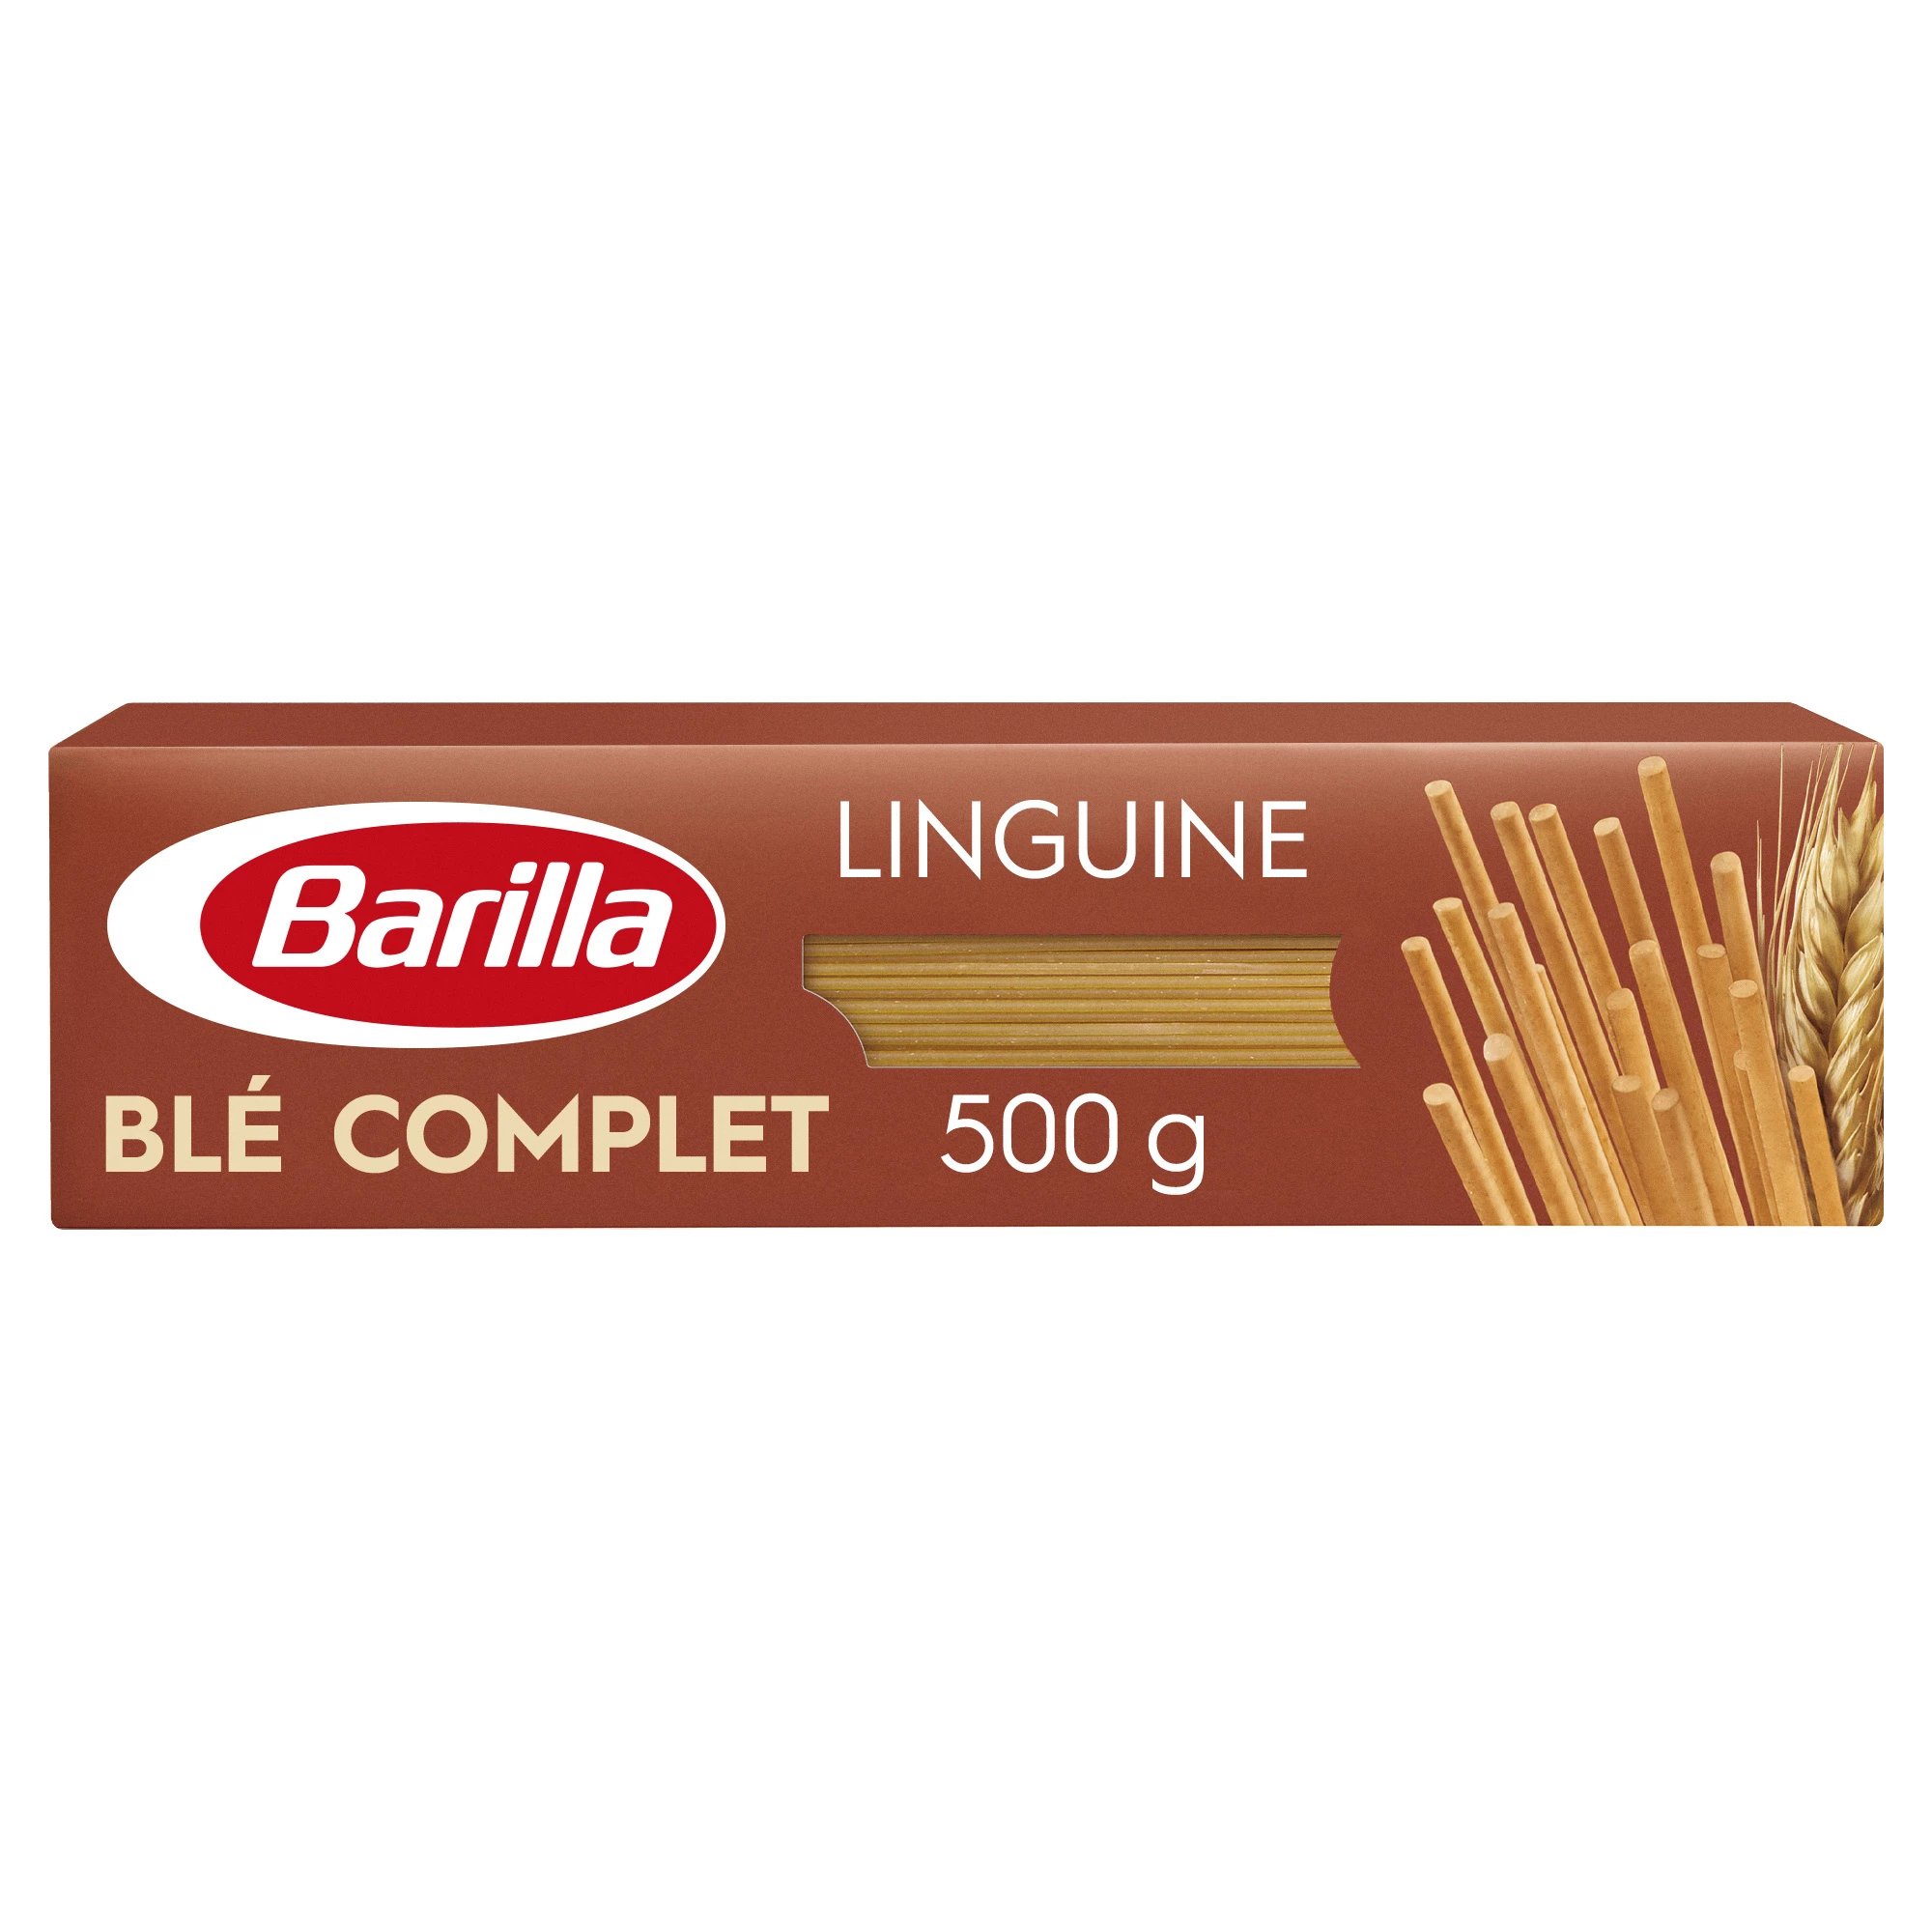 Linguine Ble Compleet 500g